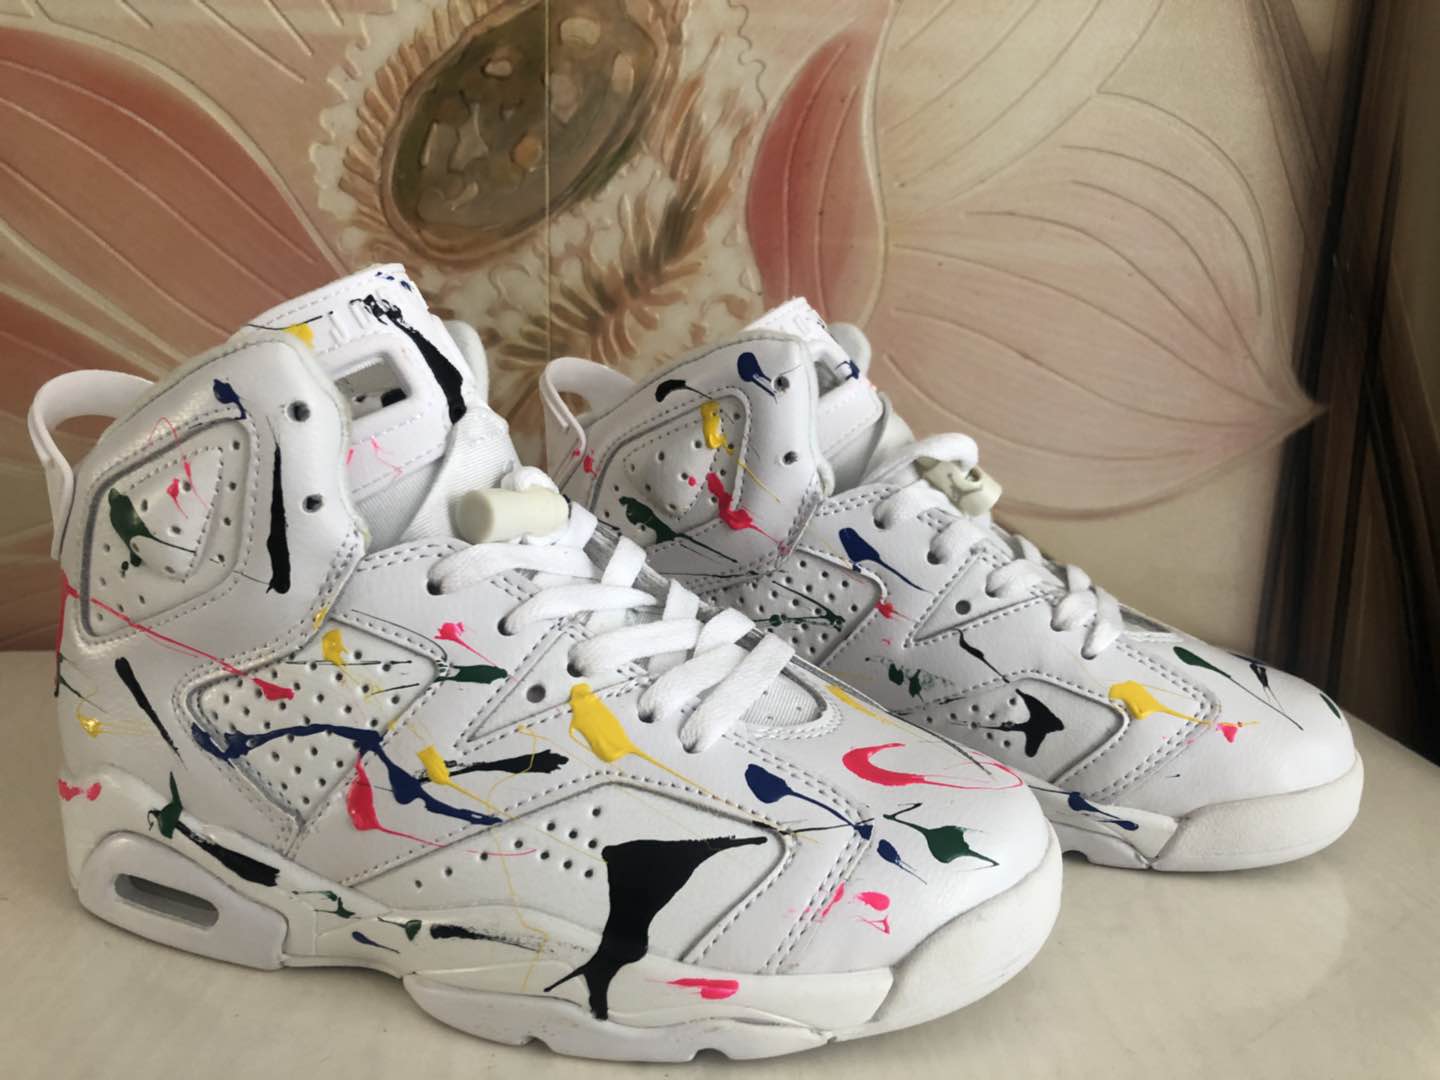 Air Jordan 6 White Graffiti Shoes